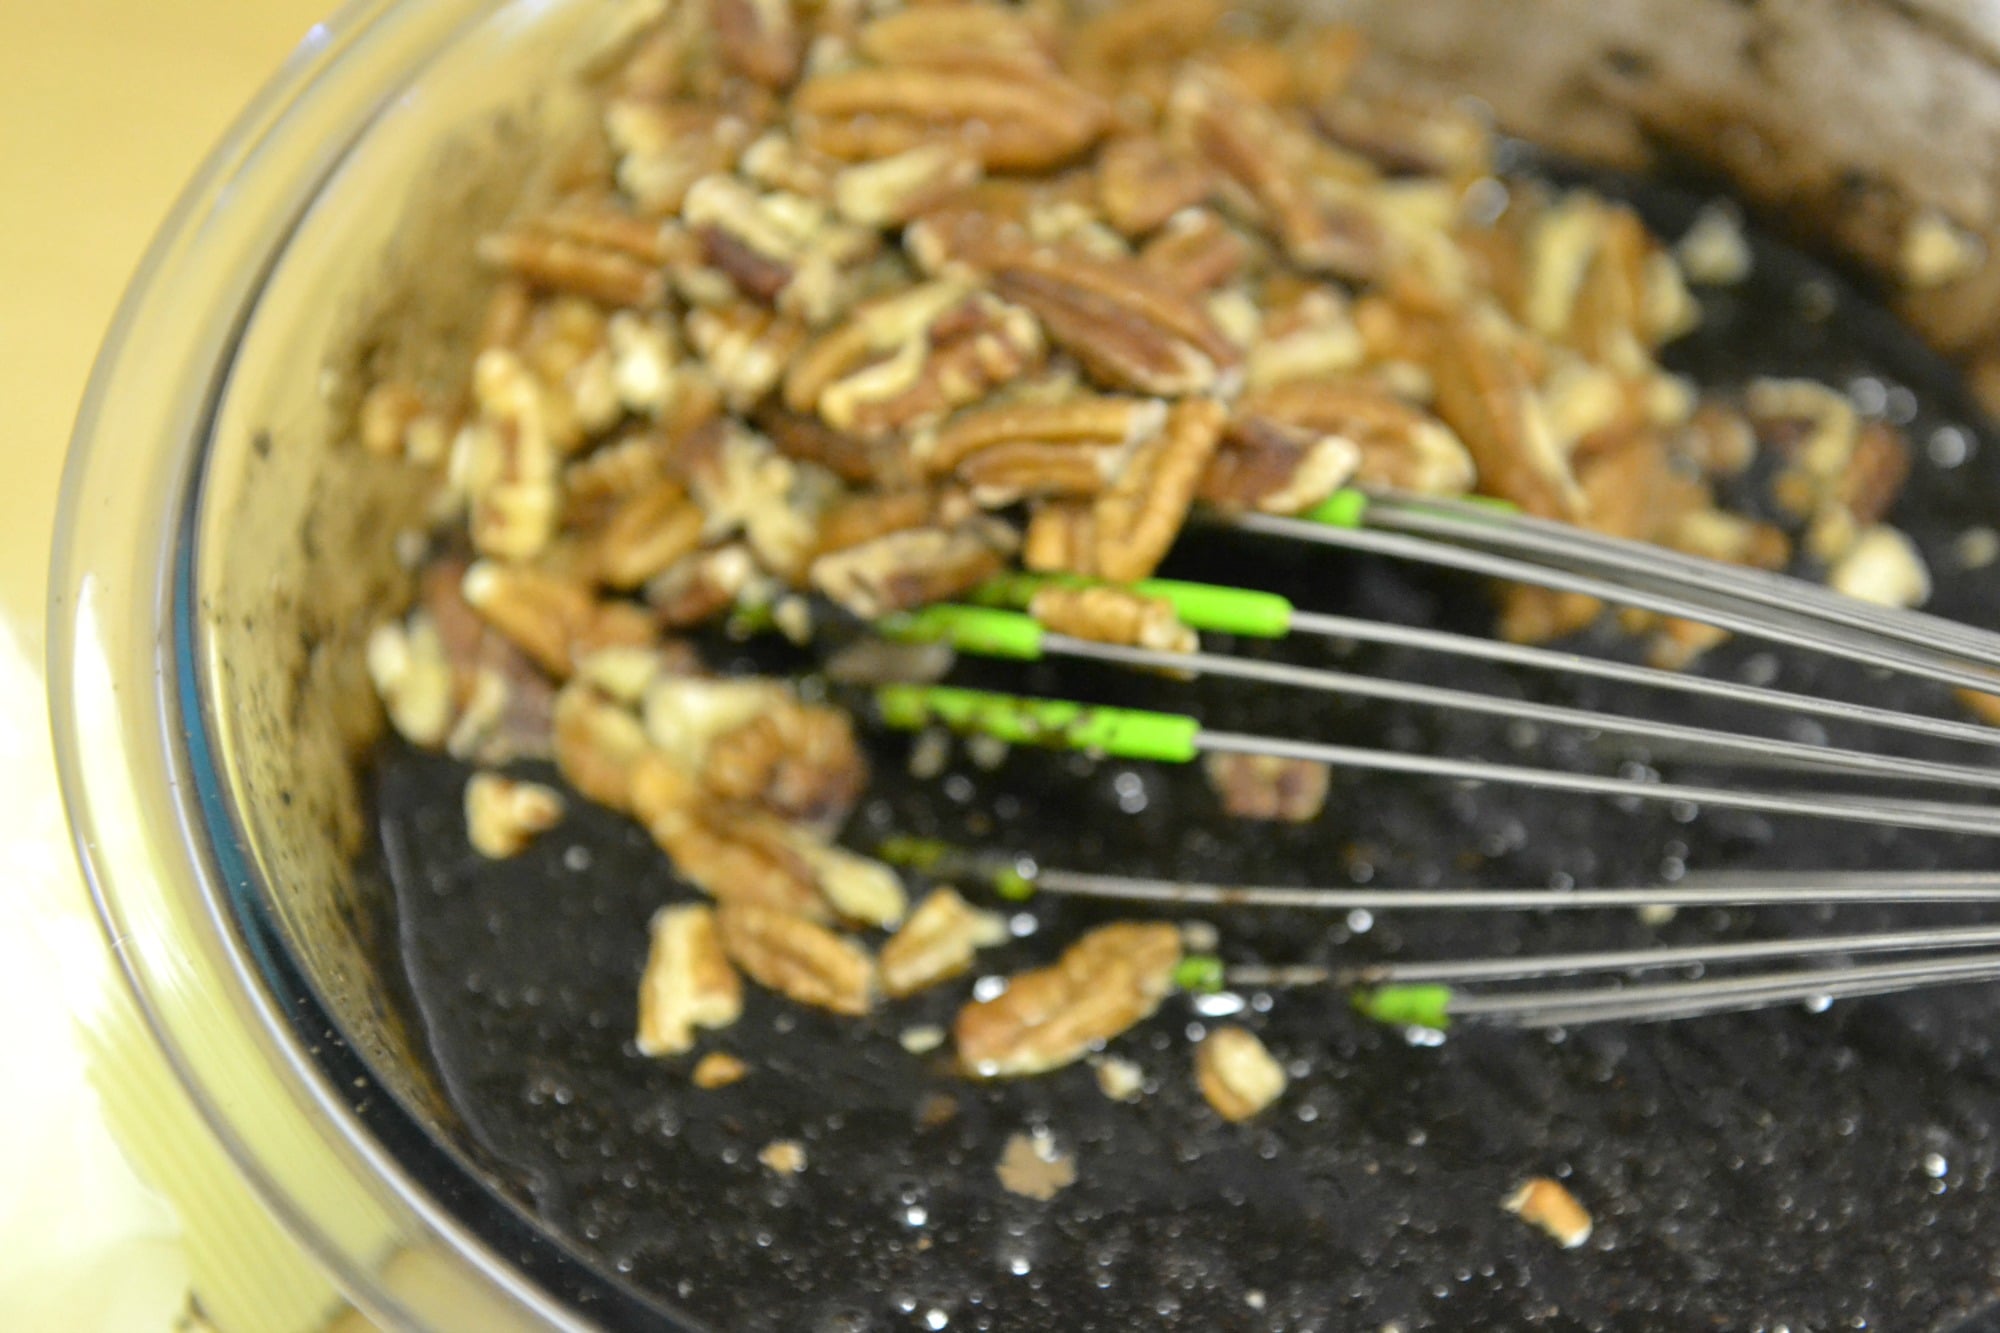 Stir chopped pecans into the pecan pie mixture